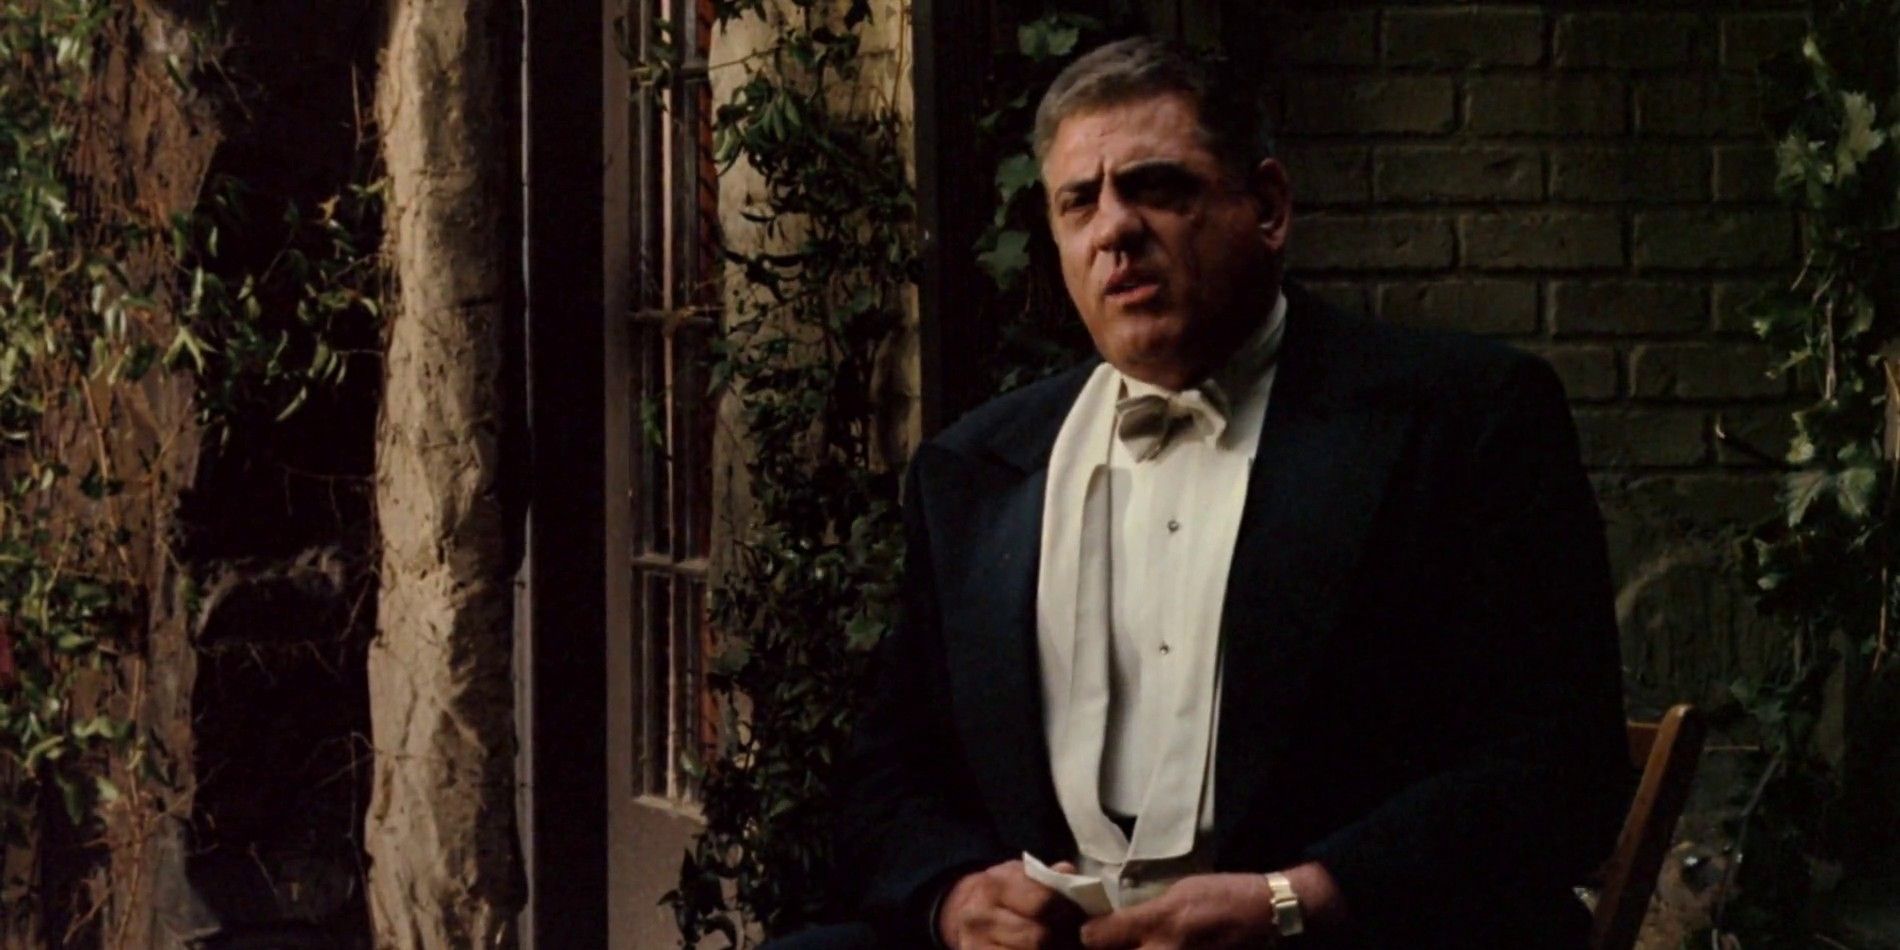 Lenny Montana as Luca Brasi in The Godfather